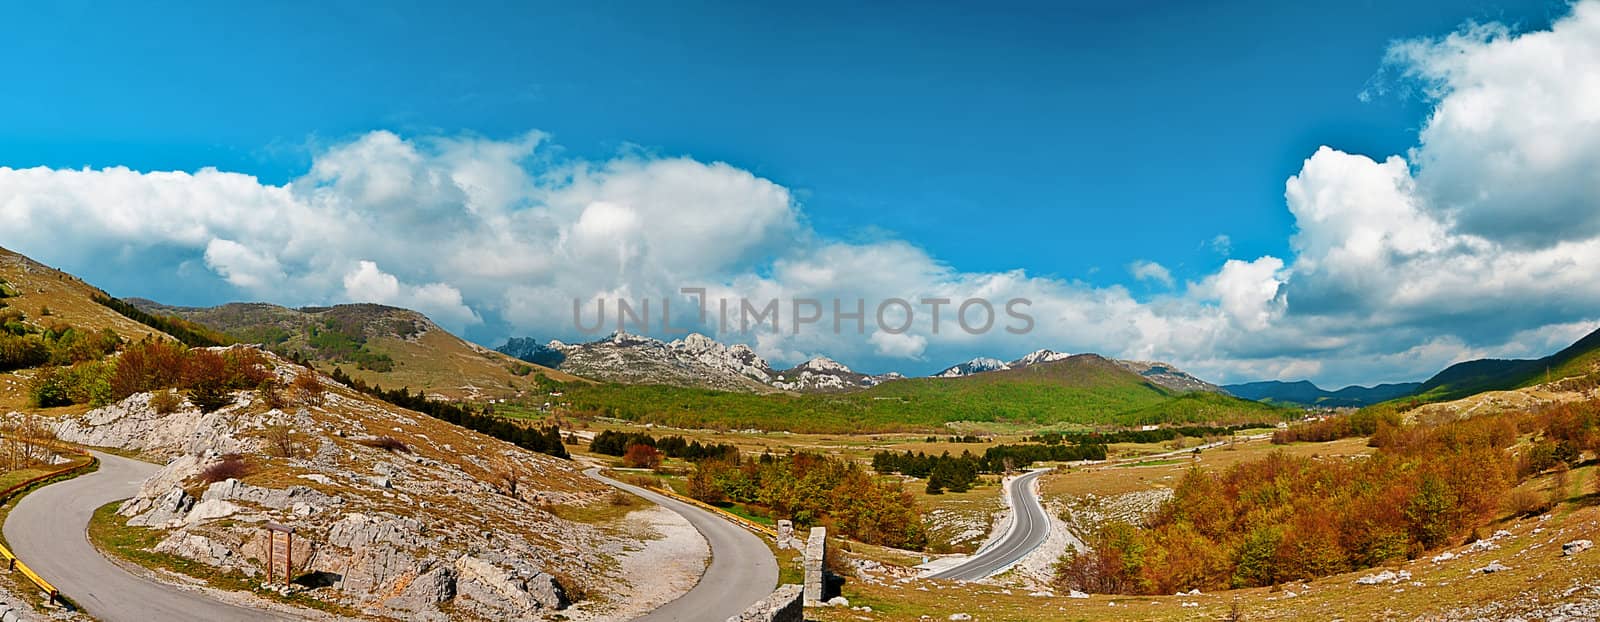 Panoramic HDR photo of the mountain pass Karlobag-Gospic in the Velebit mountain, Croatia.